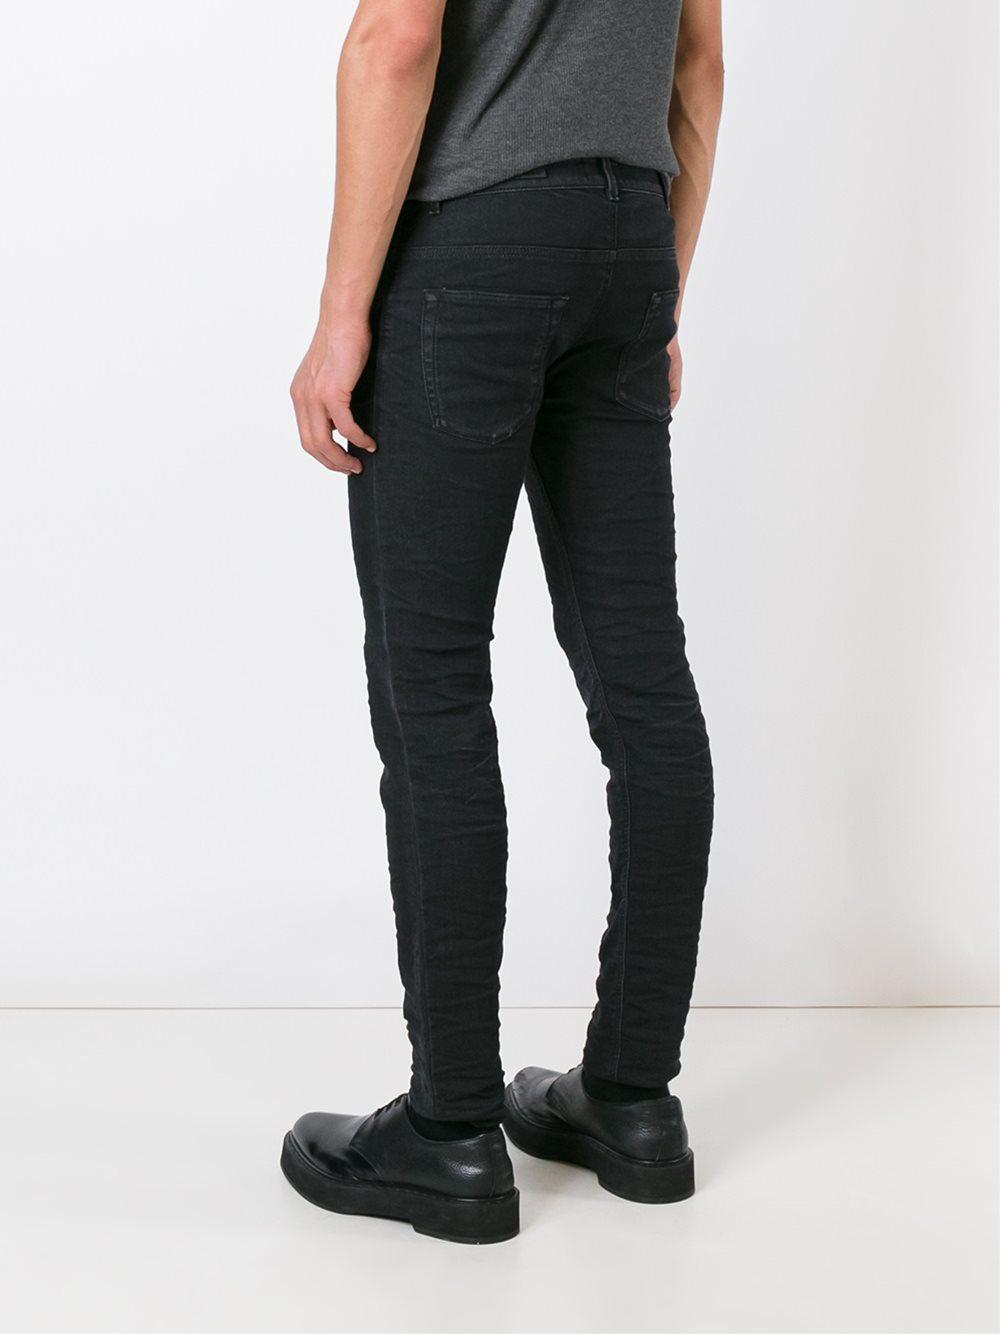 Diesel Black Gold Denim 'type-2628' Jeans in Black for Men - Lyst